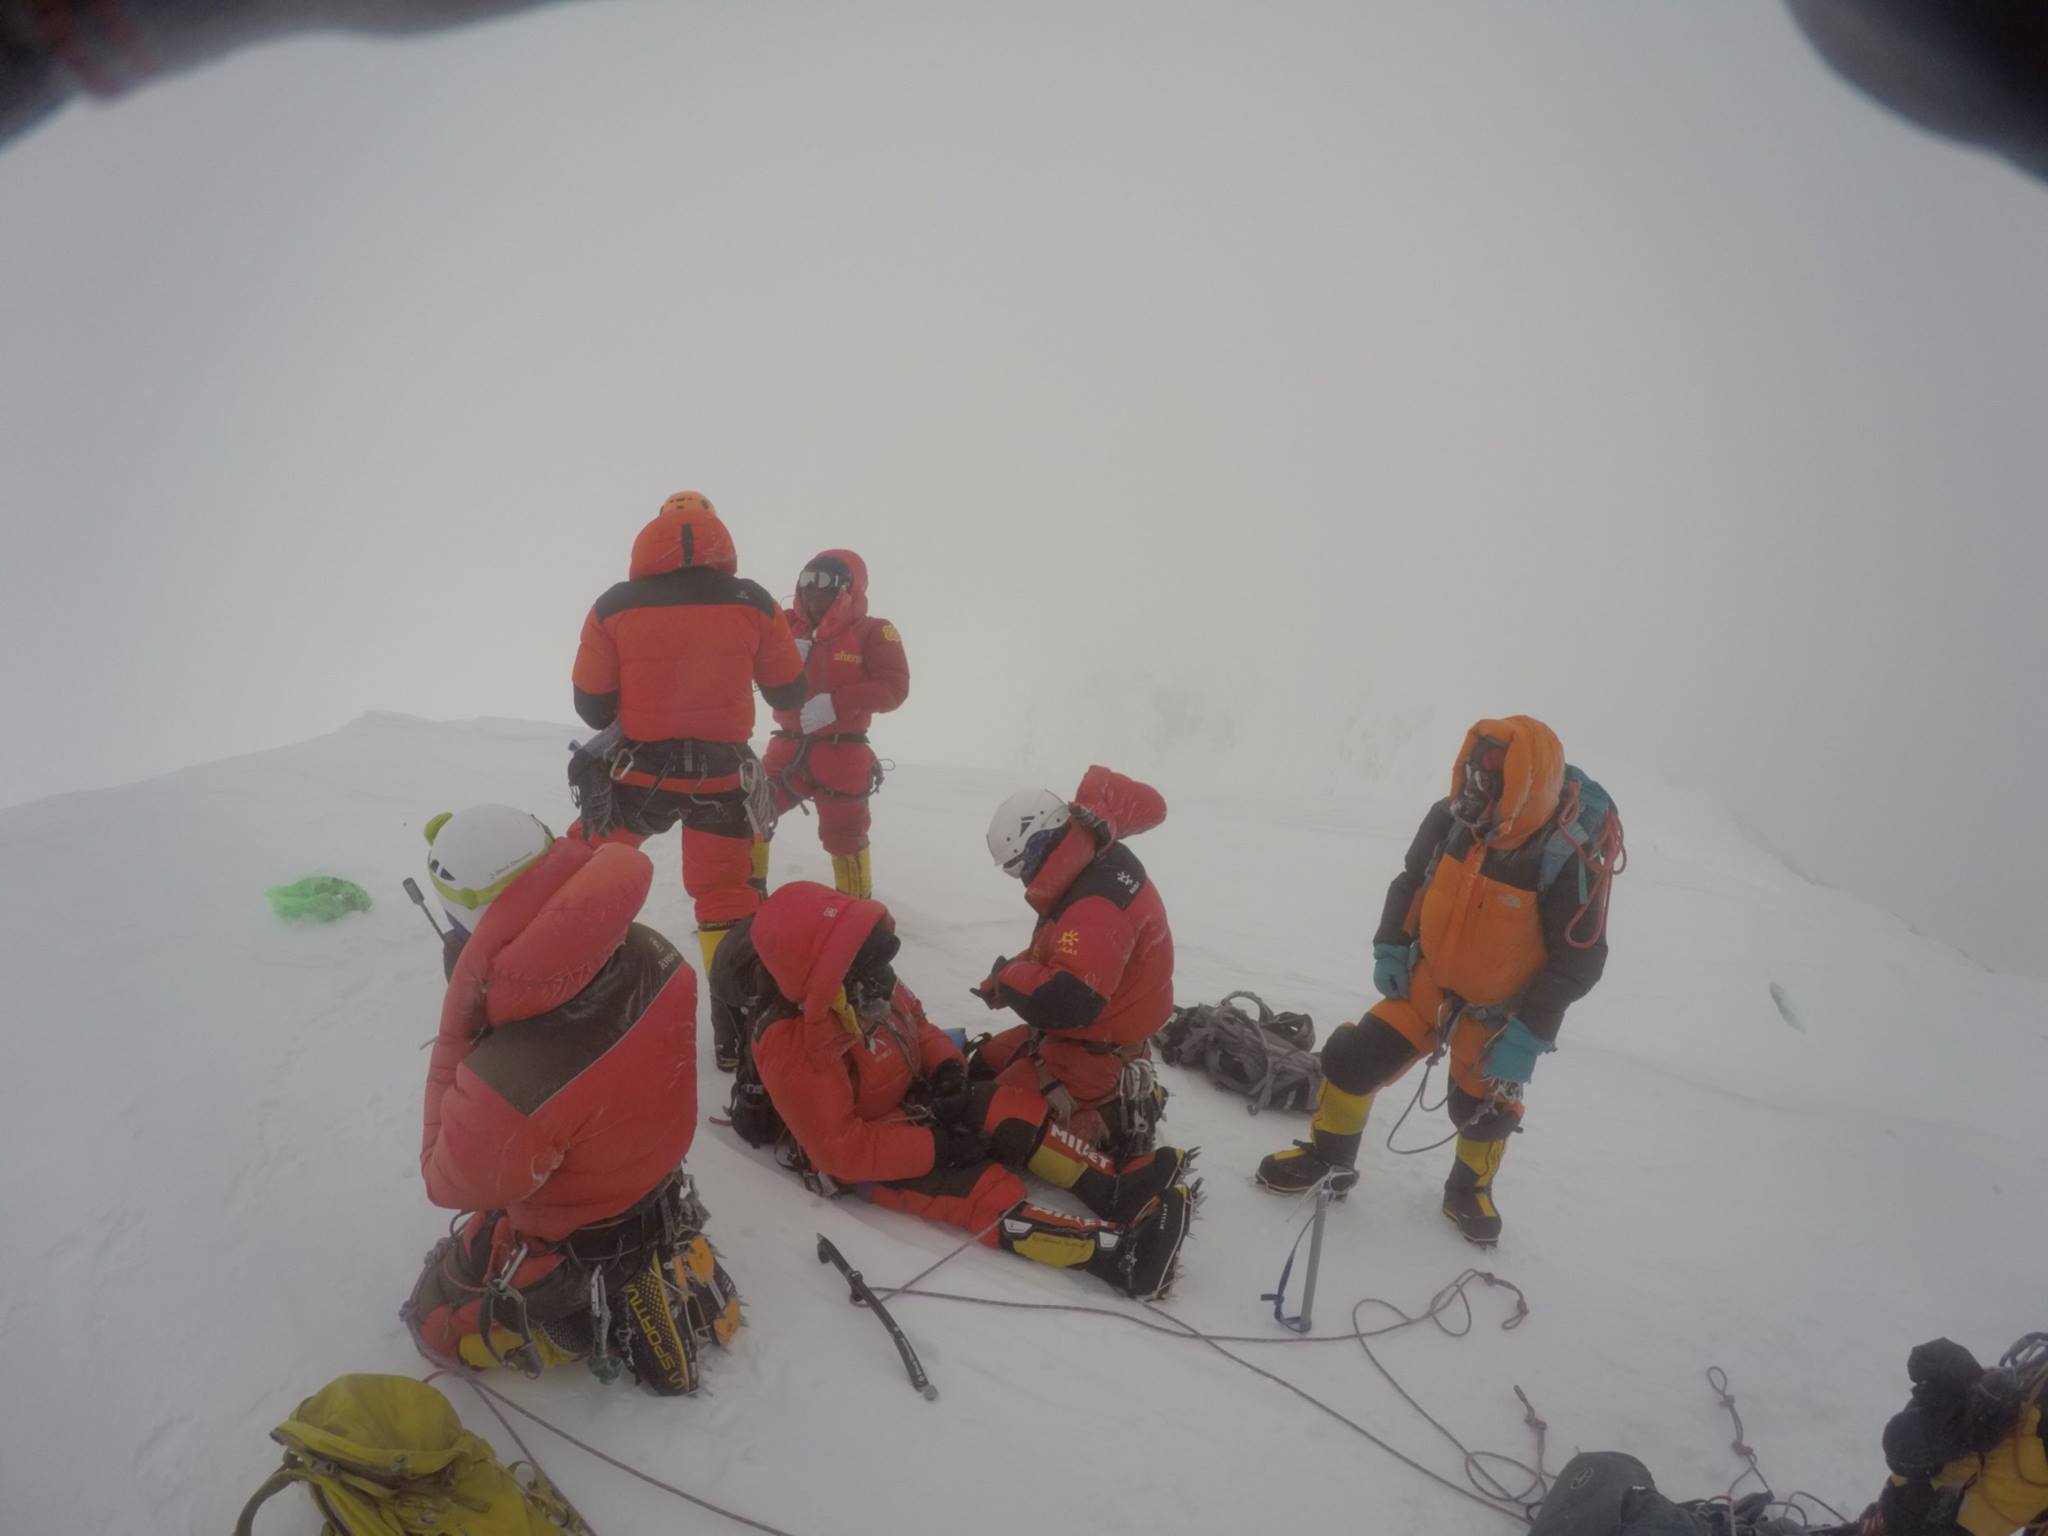 Fredrik Strange Broad Peak summit